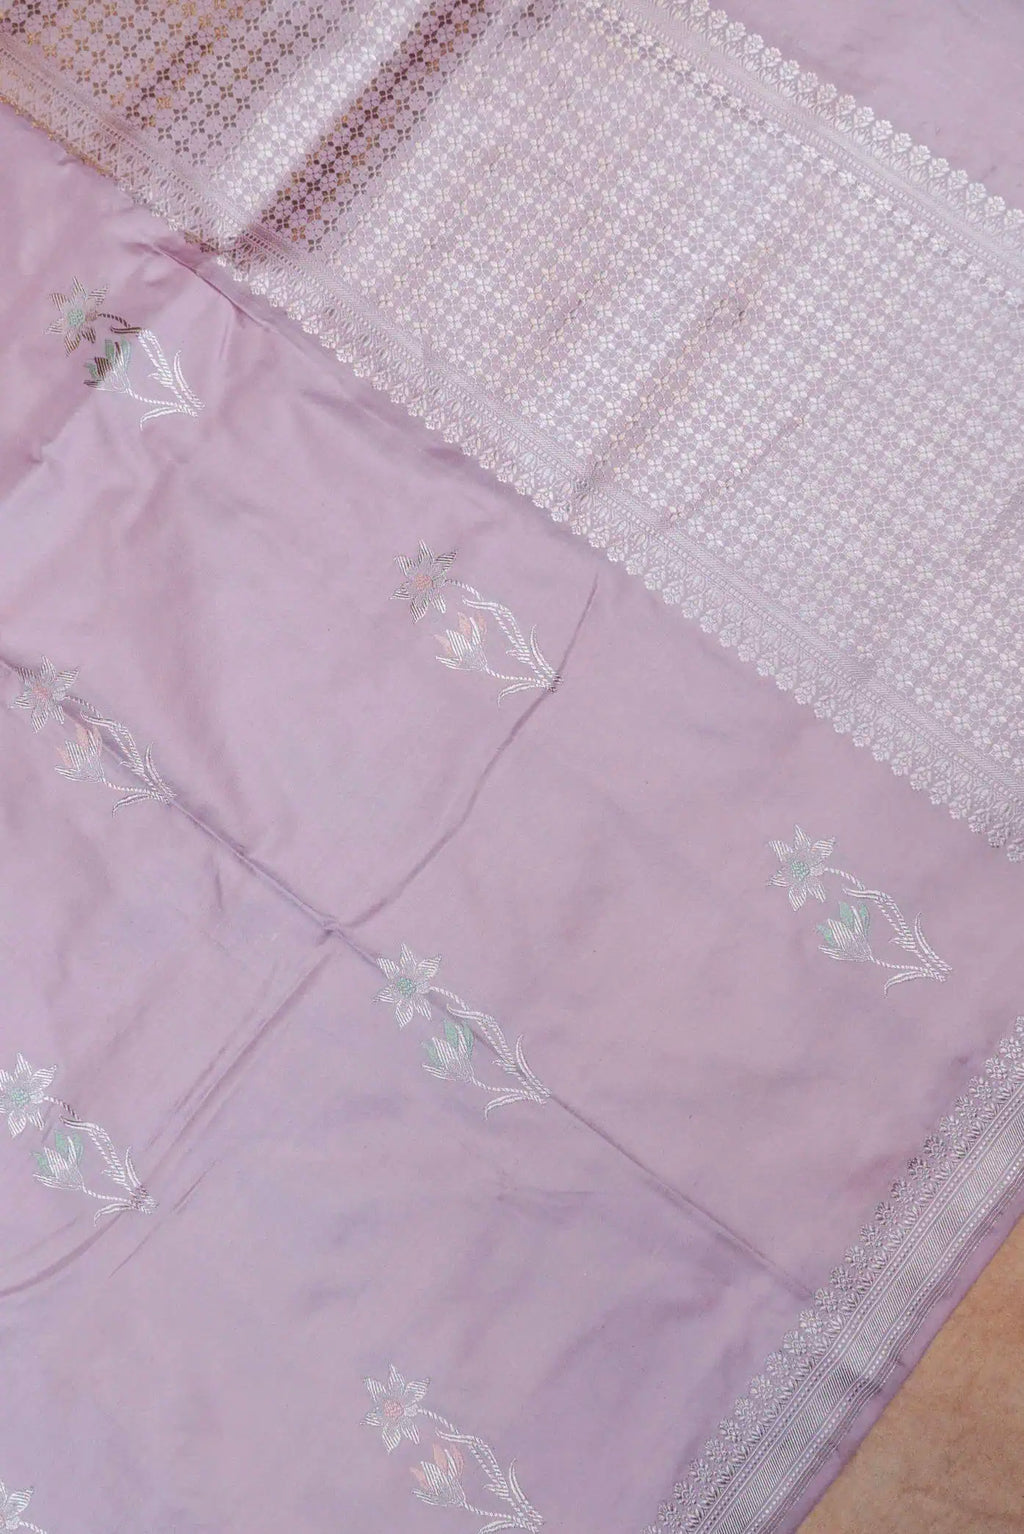 Handwoven Pastel Purple Banarasi  Katan Silk Saree